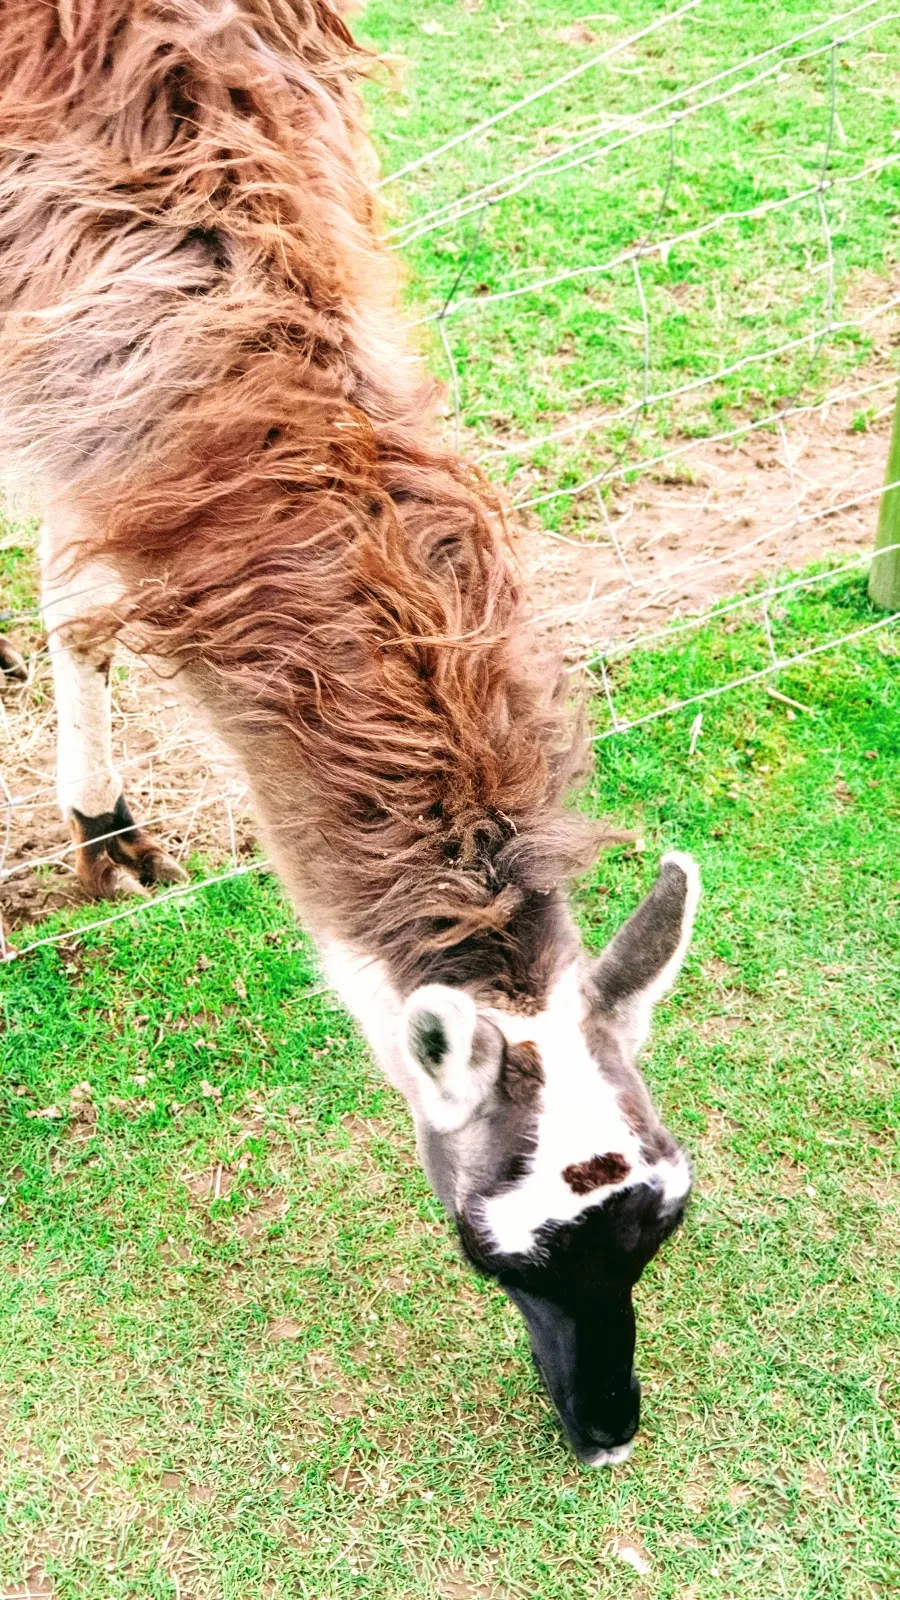 Selfie with a llama